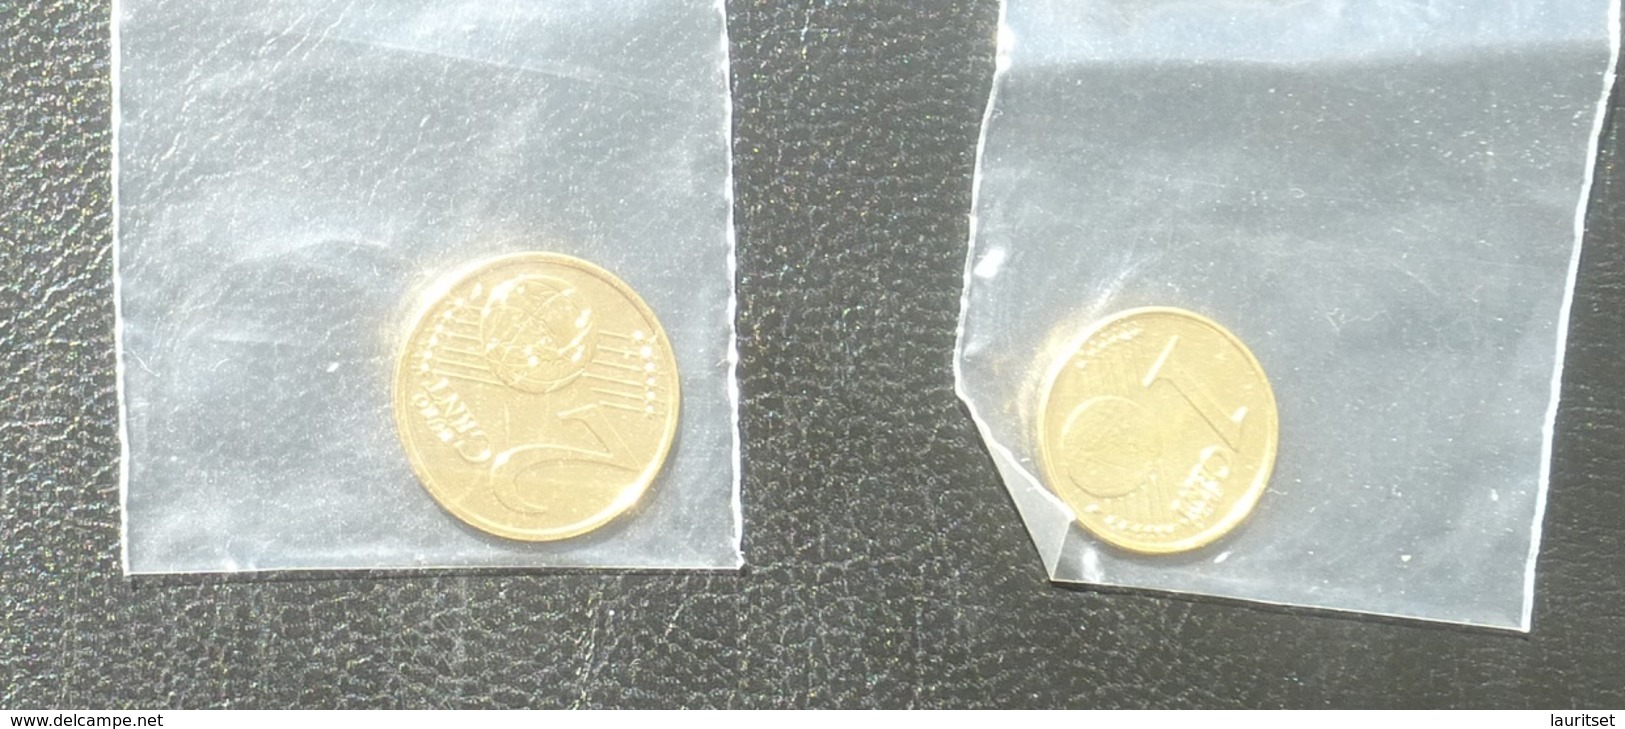 ESTLAND ESTONIA 1 & 2 Cent Coin Gold Plated Vergoldet 999/1000 (24 Karat) - Estonia